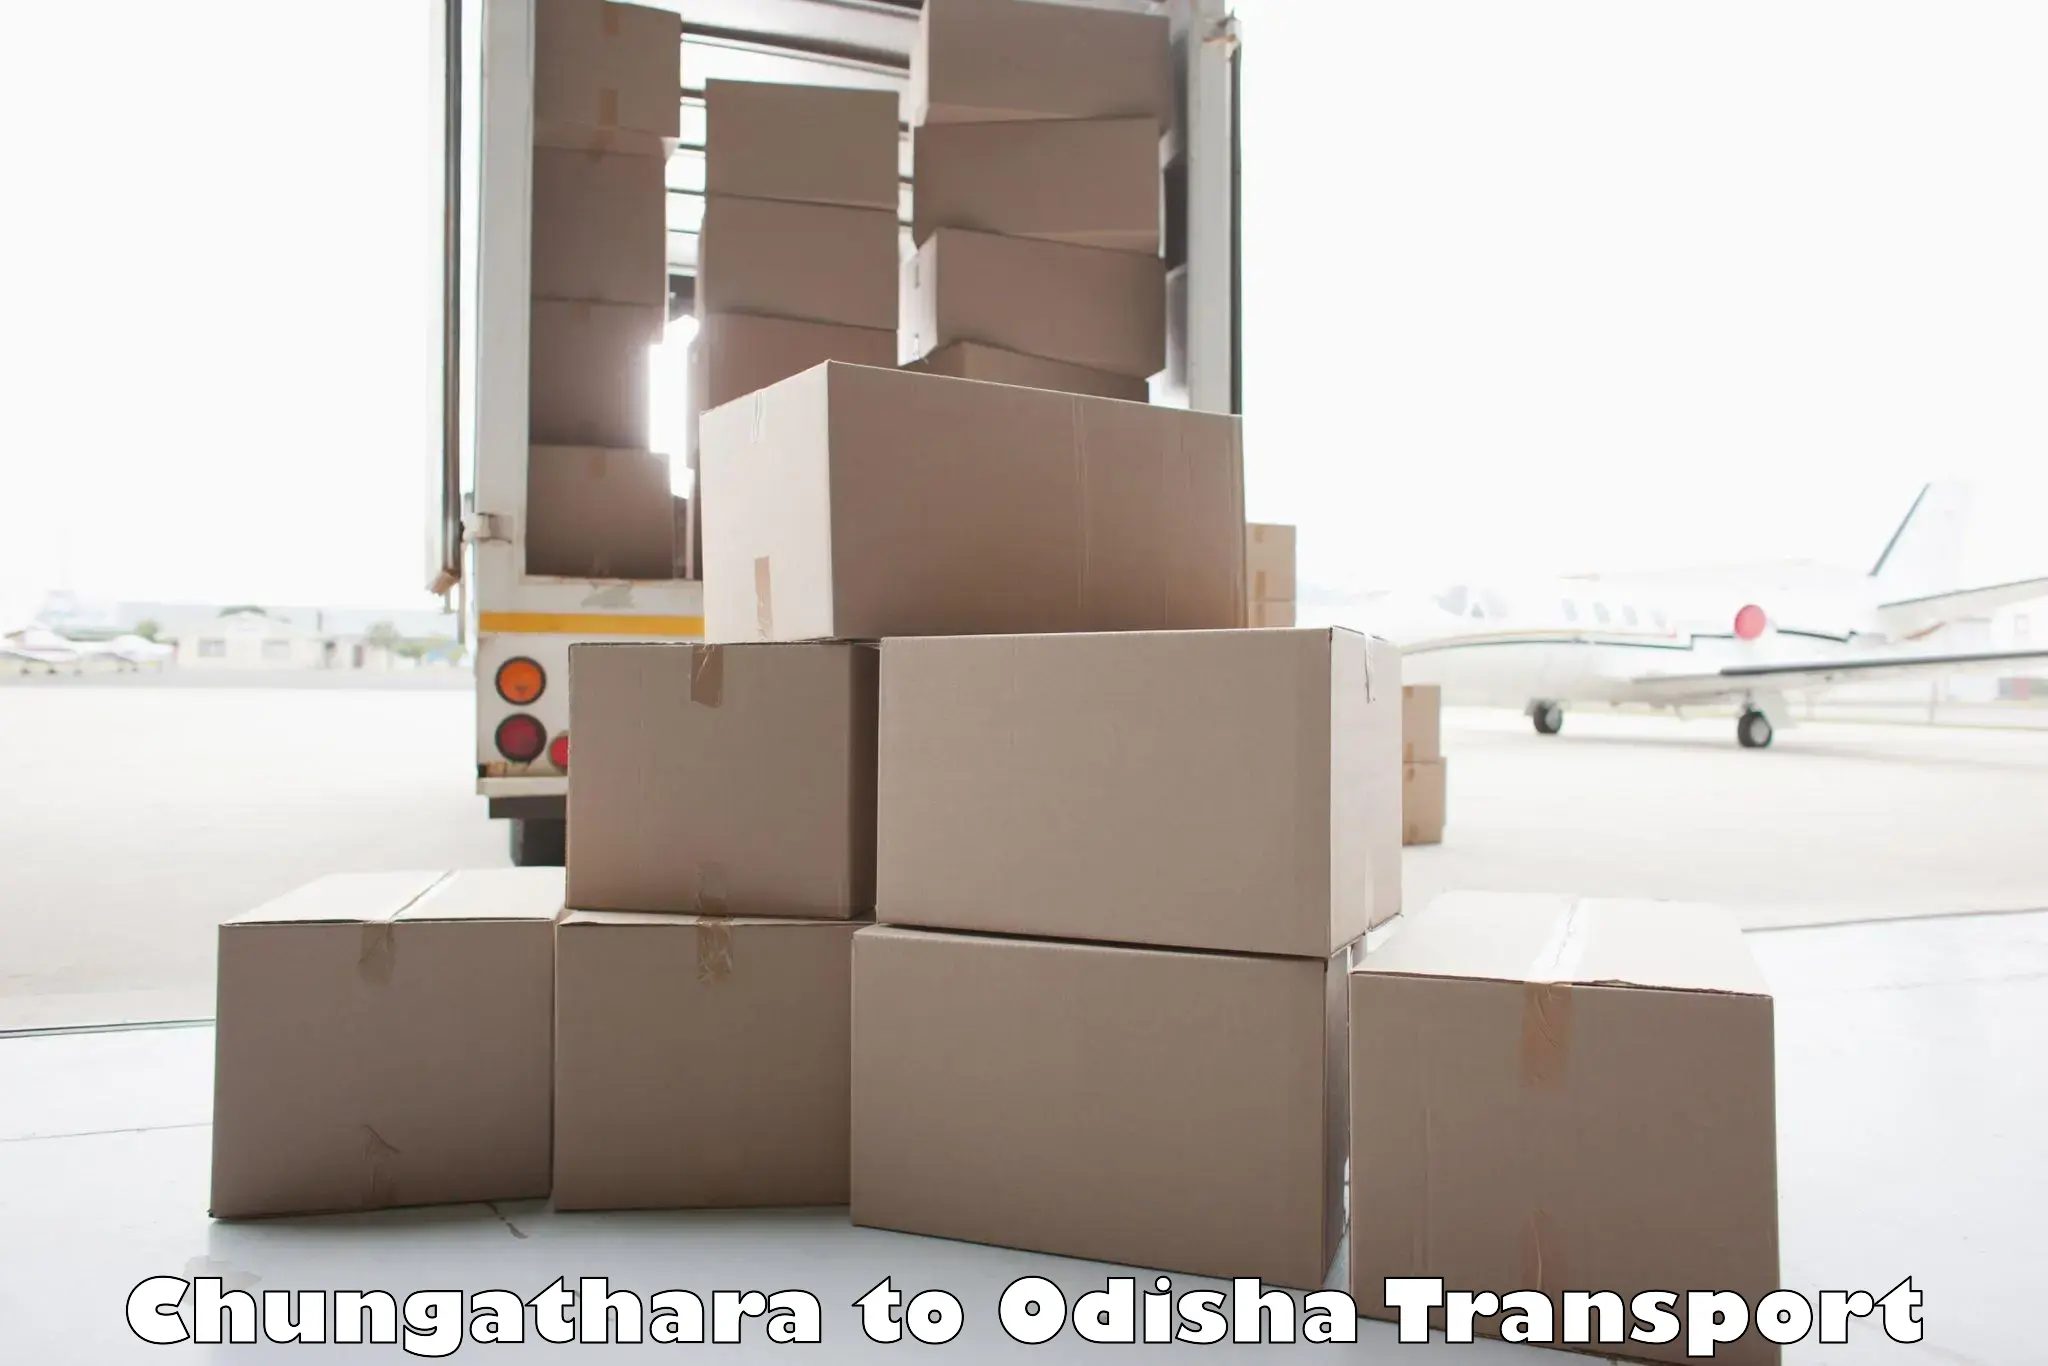 Container transport service Chungathara to Kandhamal